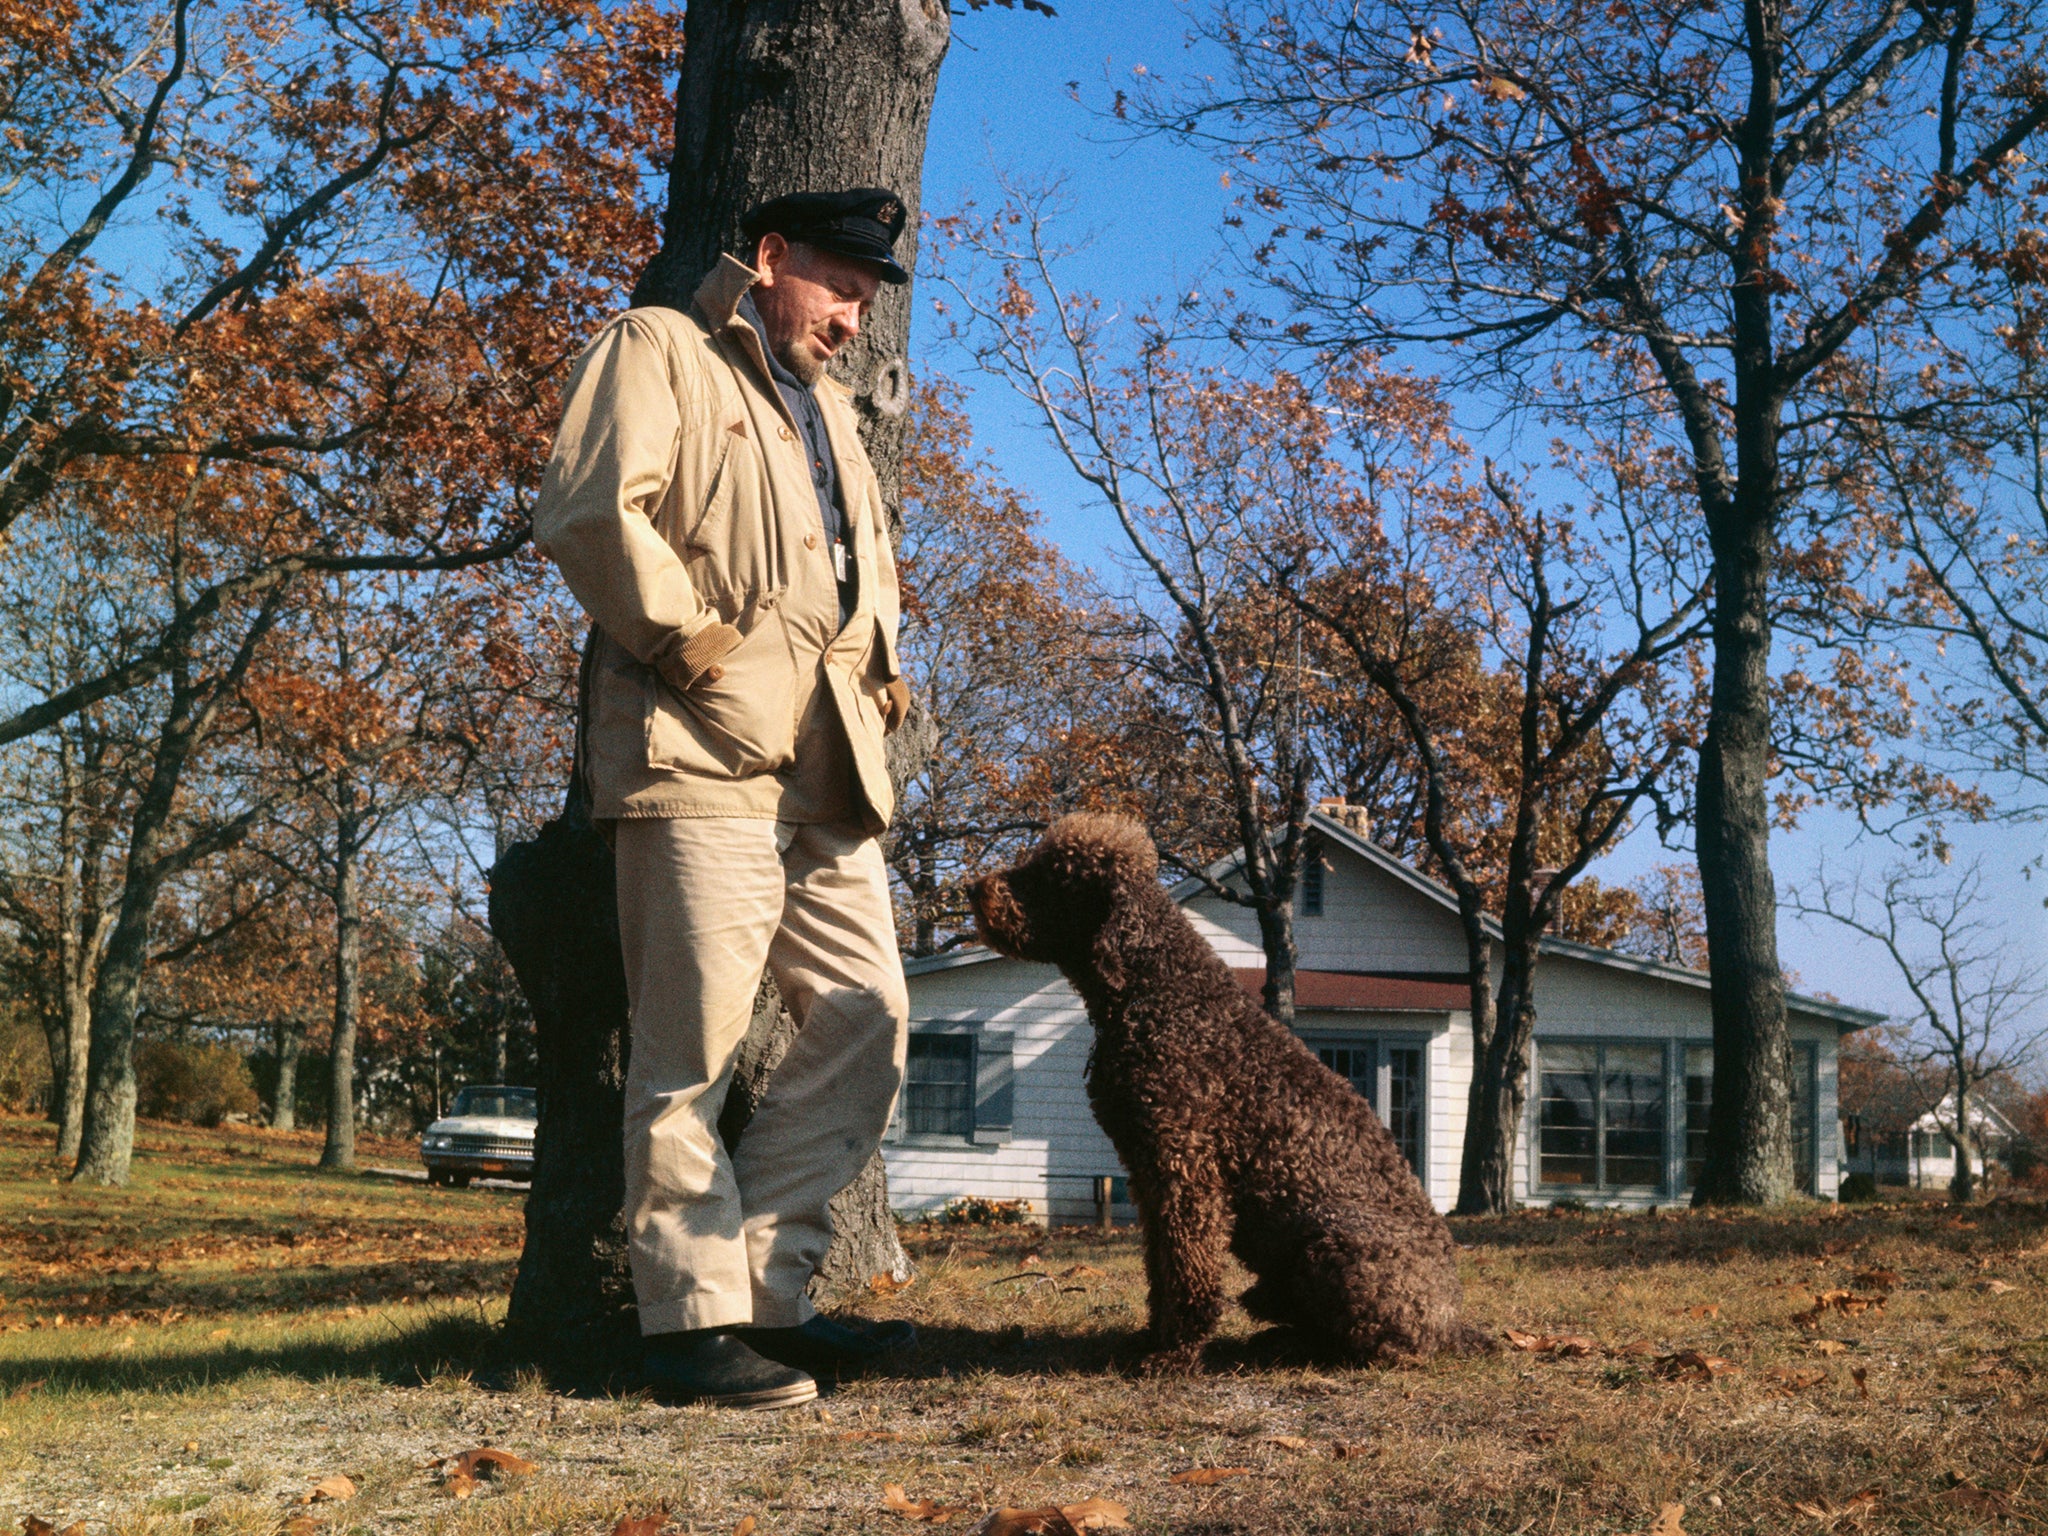 Dog days: John Steinbeck with Charley, Sag Harbor, 1962